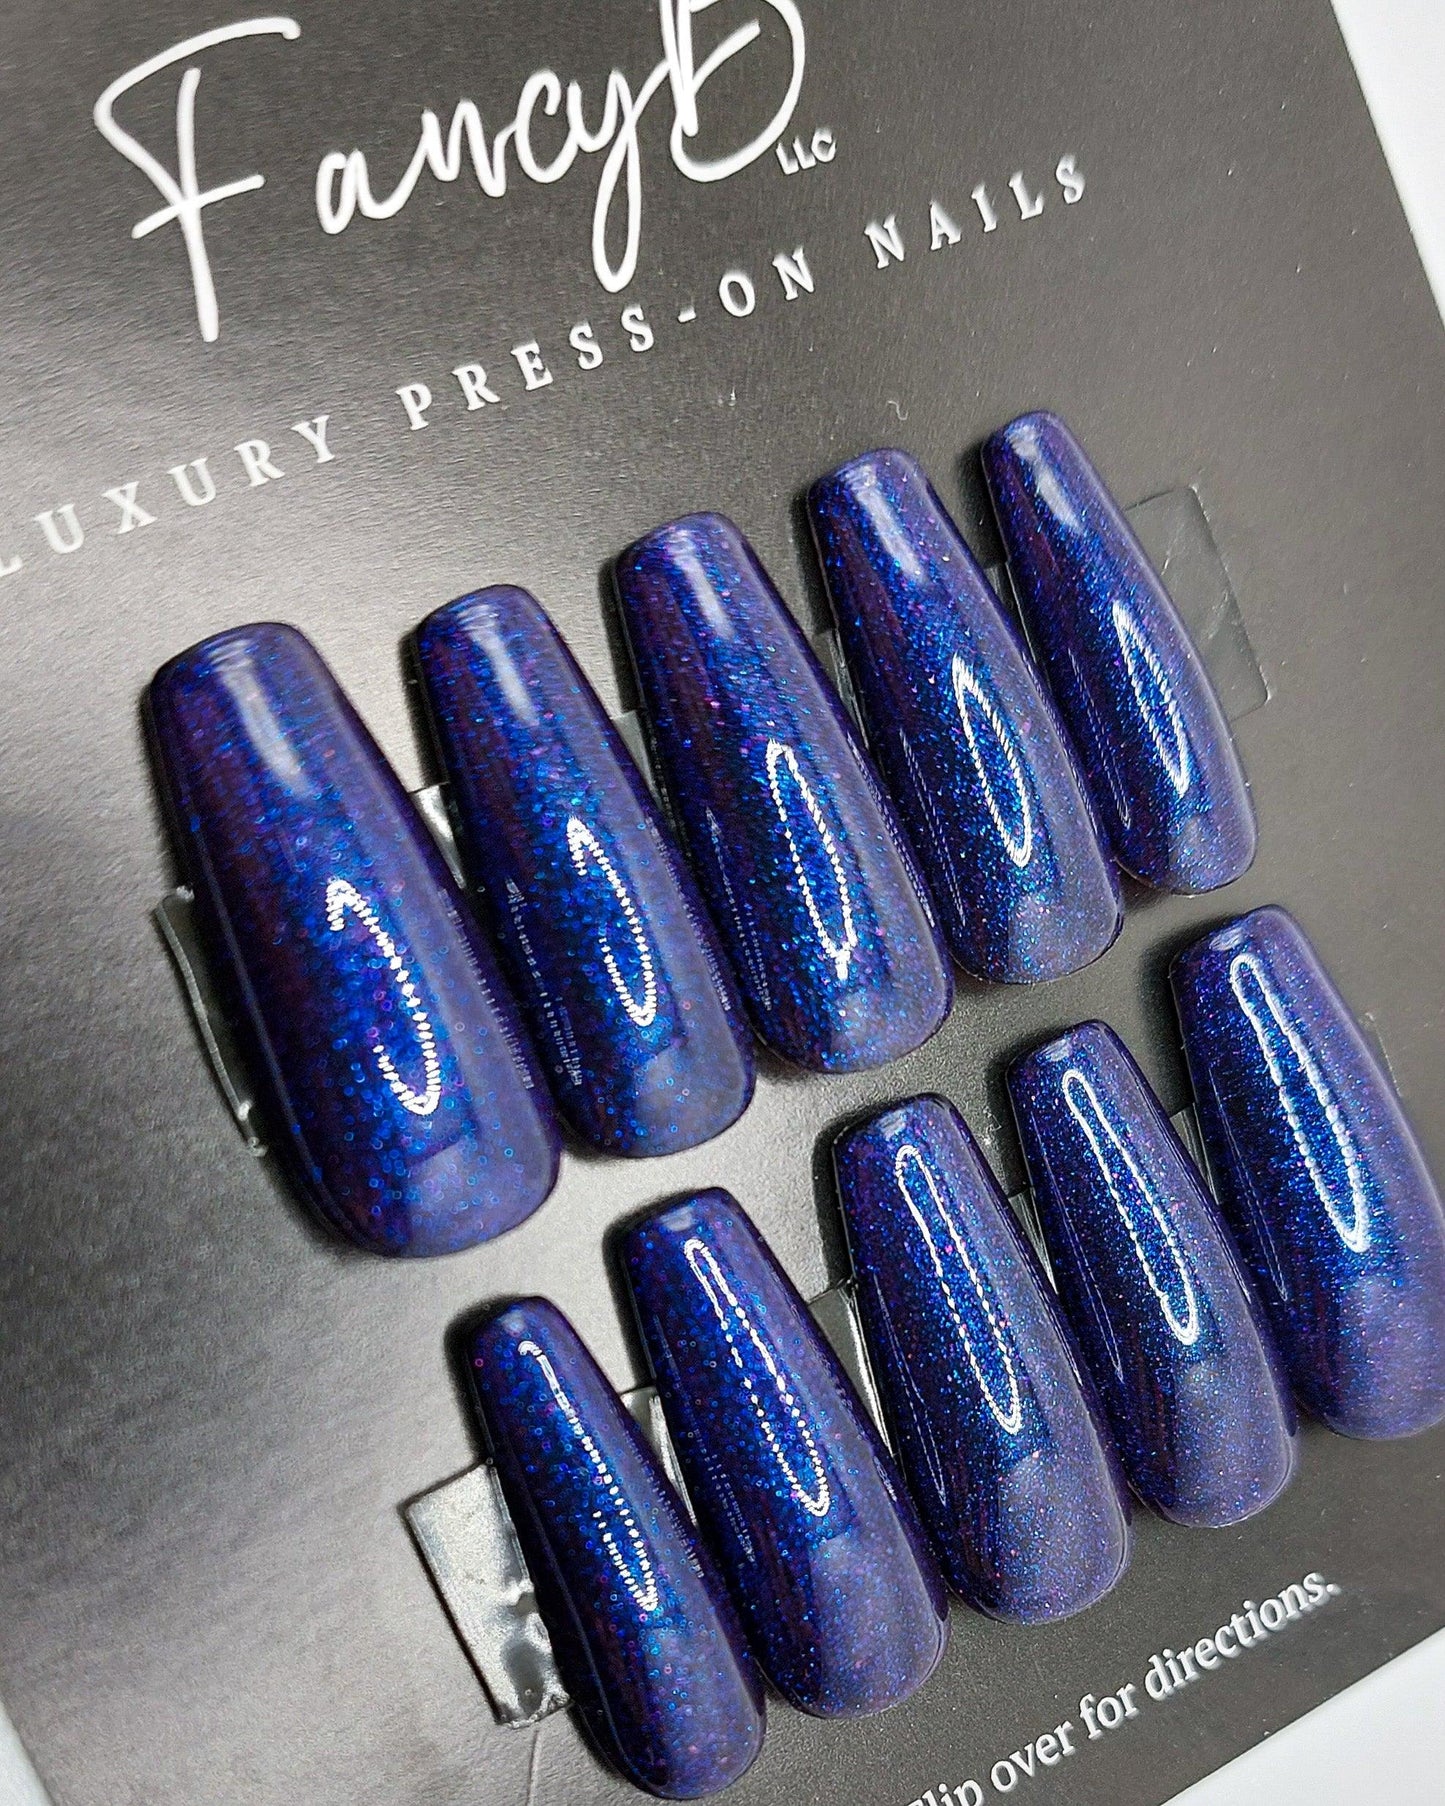 Metallic Purple Press on Nails, extra glossy metallic glue on nails.